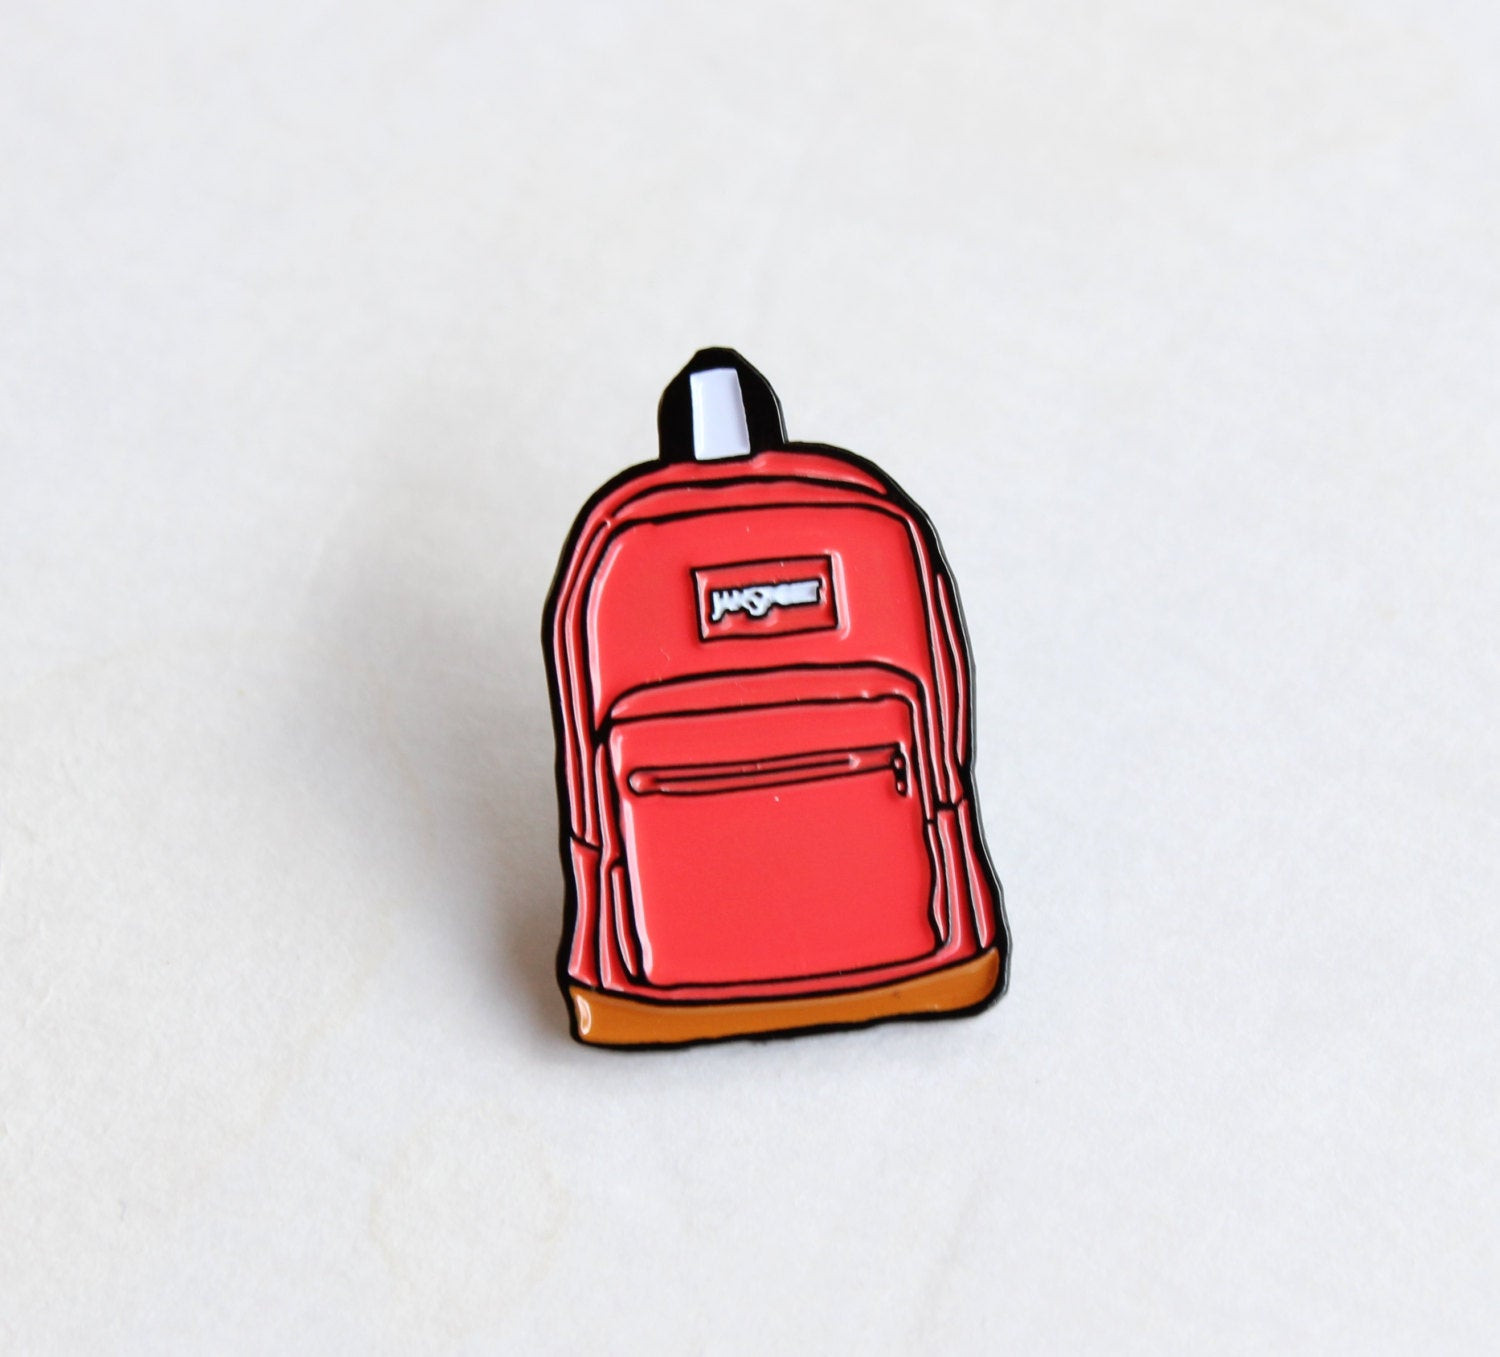 Pins On Backpack
 SALE Pink Jansport Backpack Lapel Pin 1 25 soft